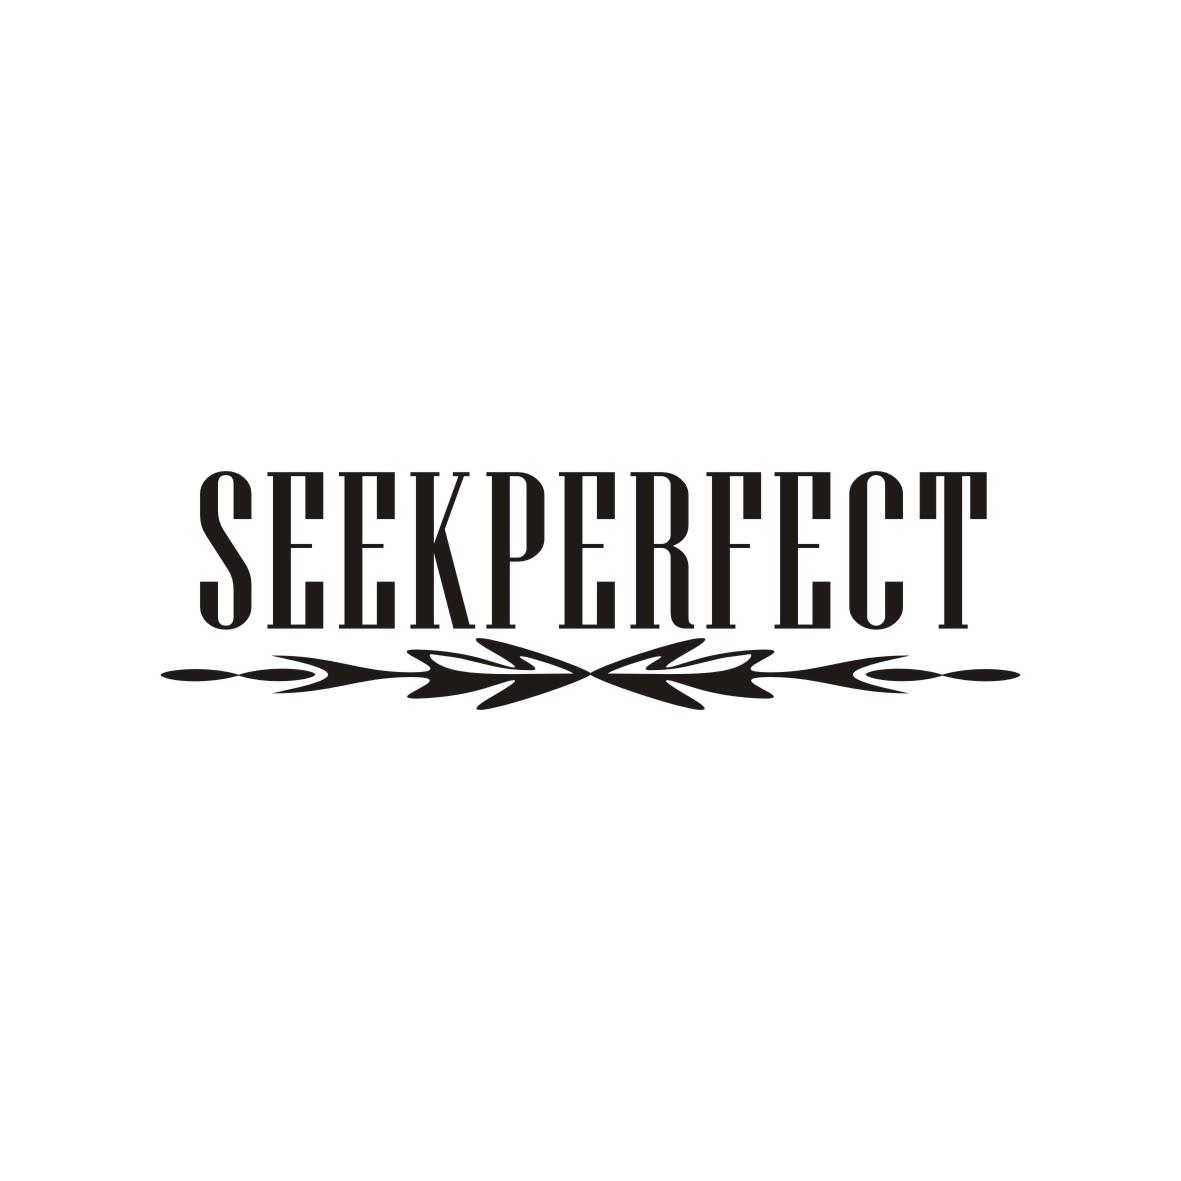 SEEKPERFECT吊坠商标转让费用买卖交易流程